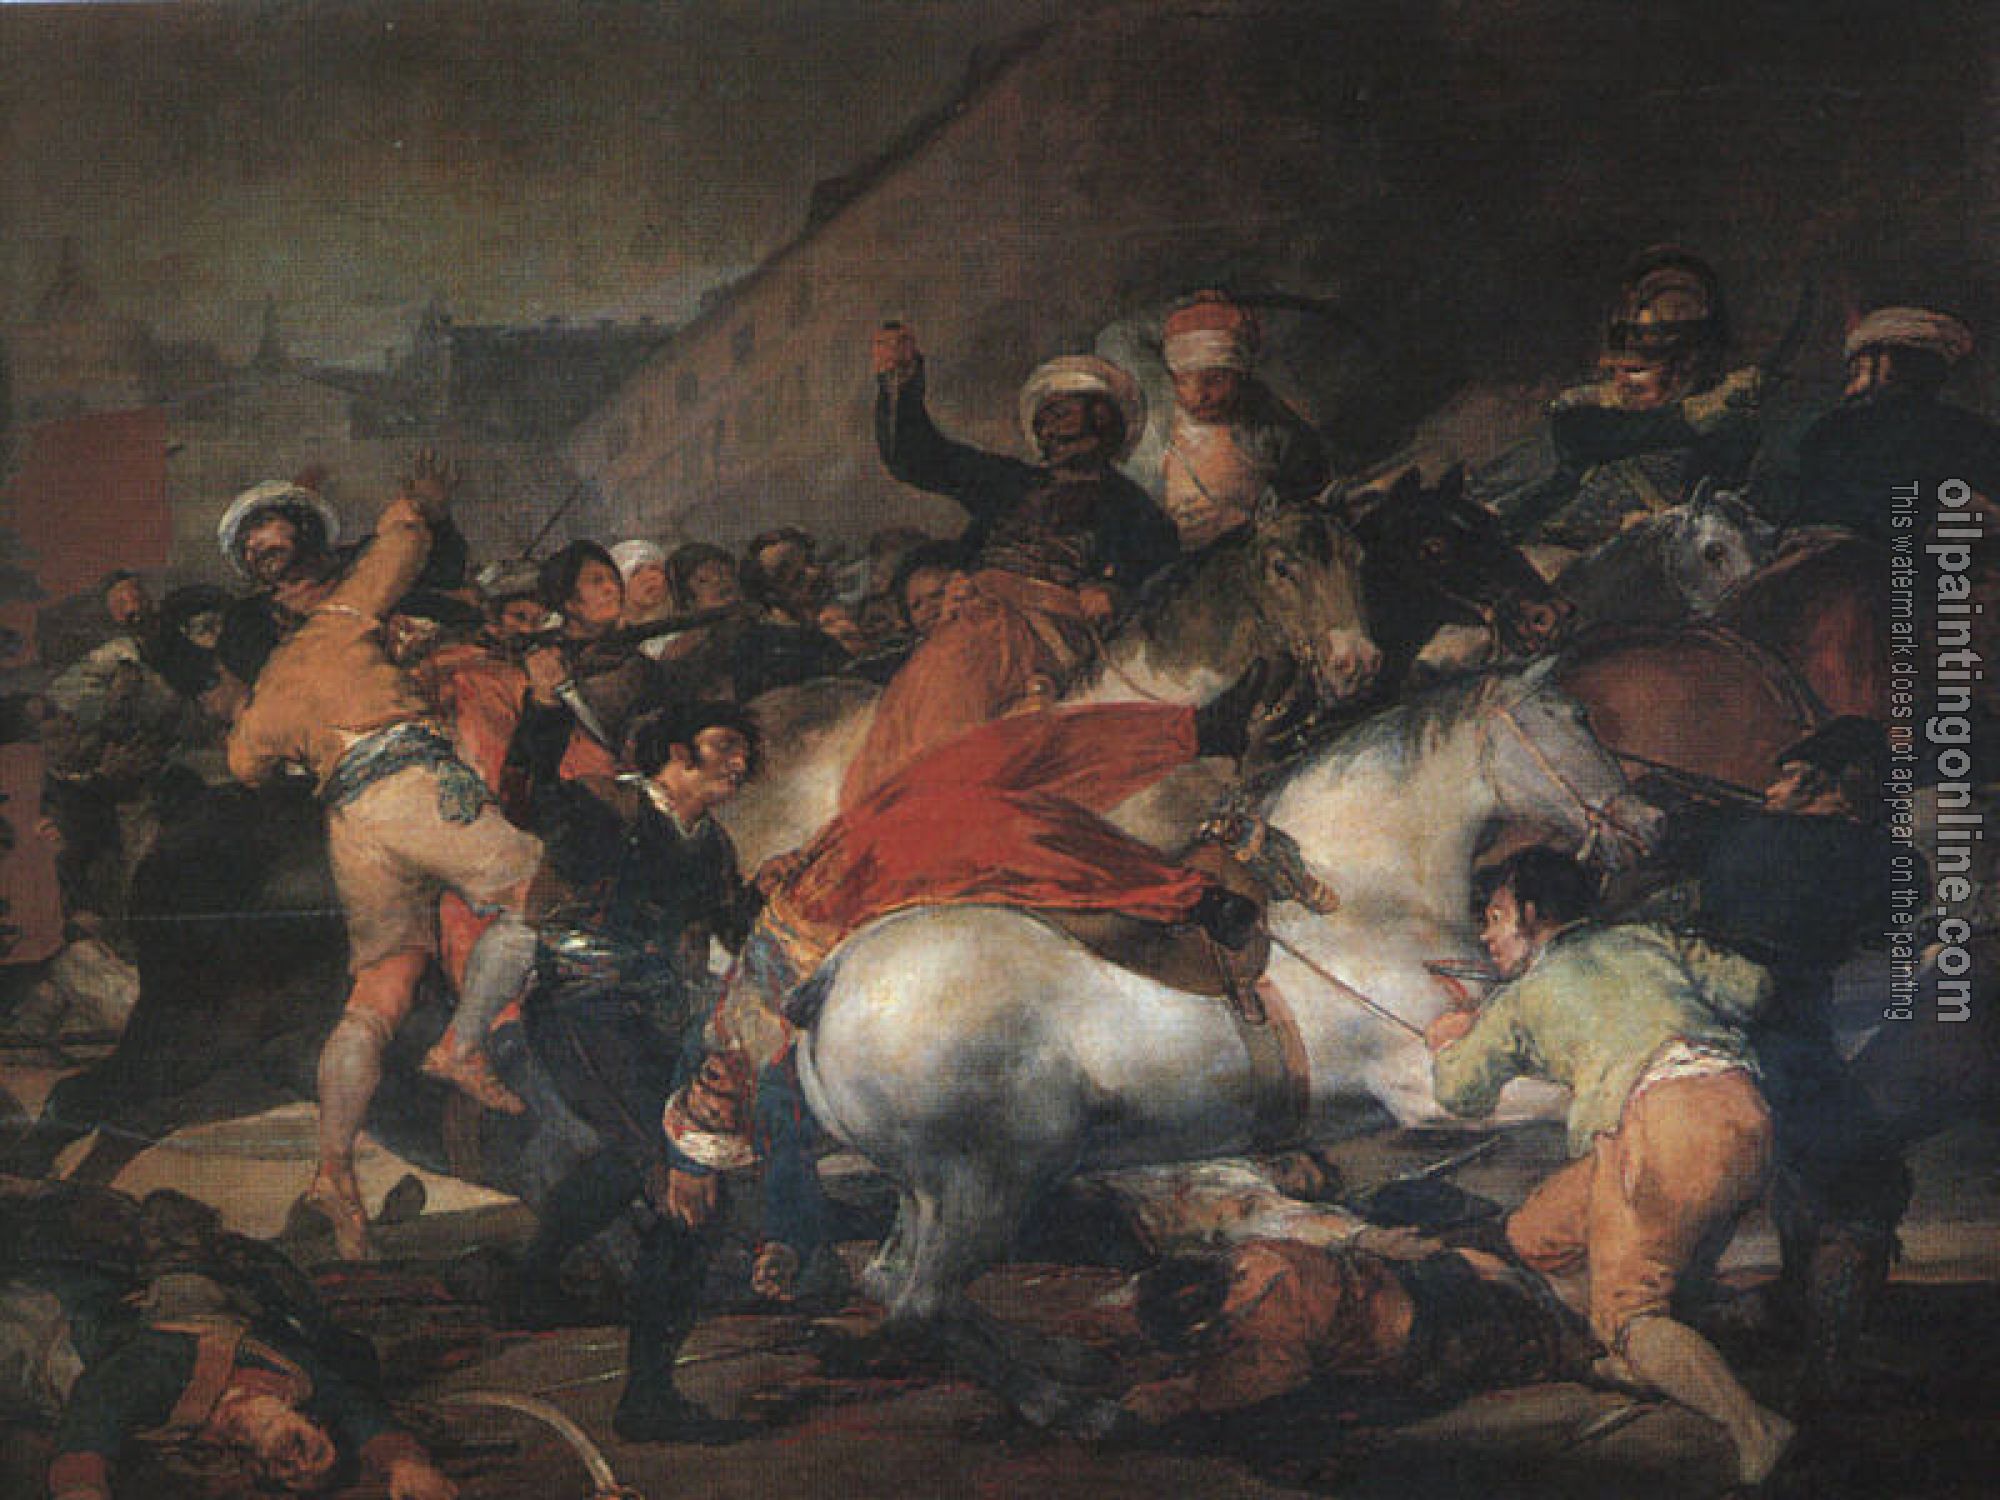 Goya, Francisco de - The Second of May 1808